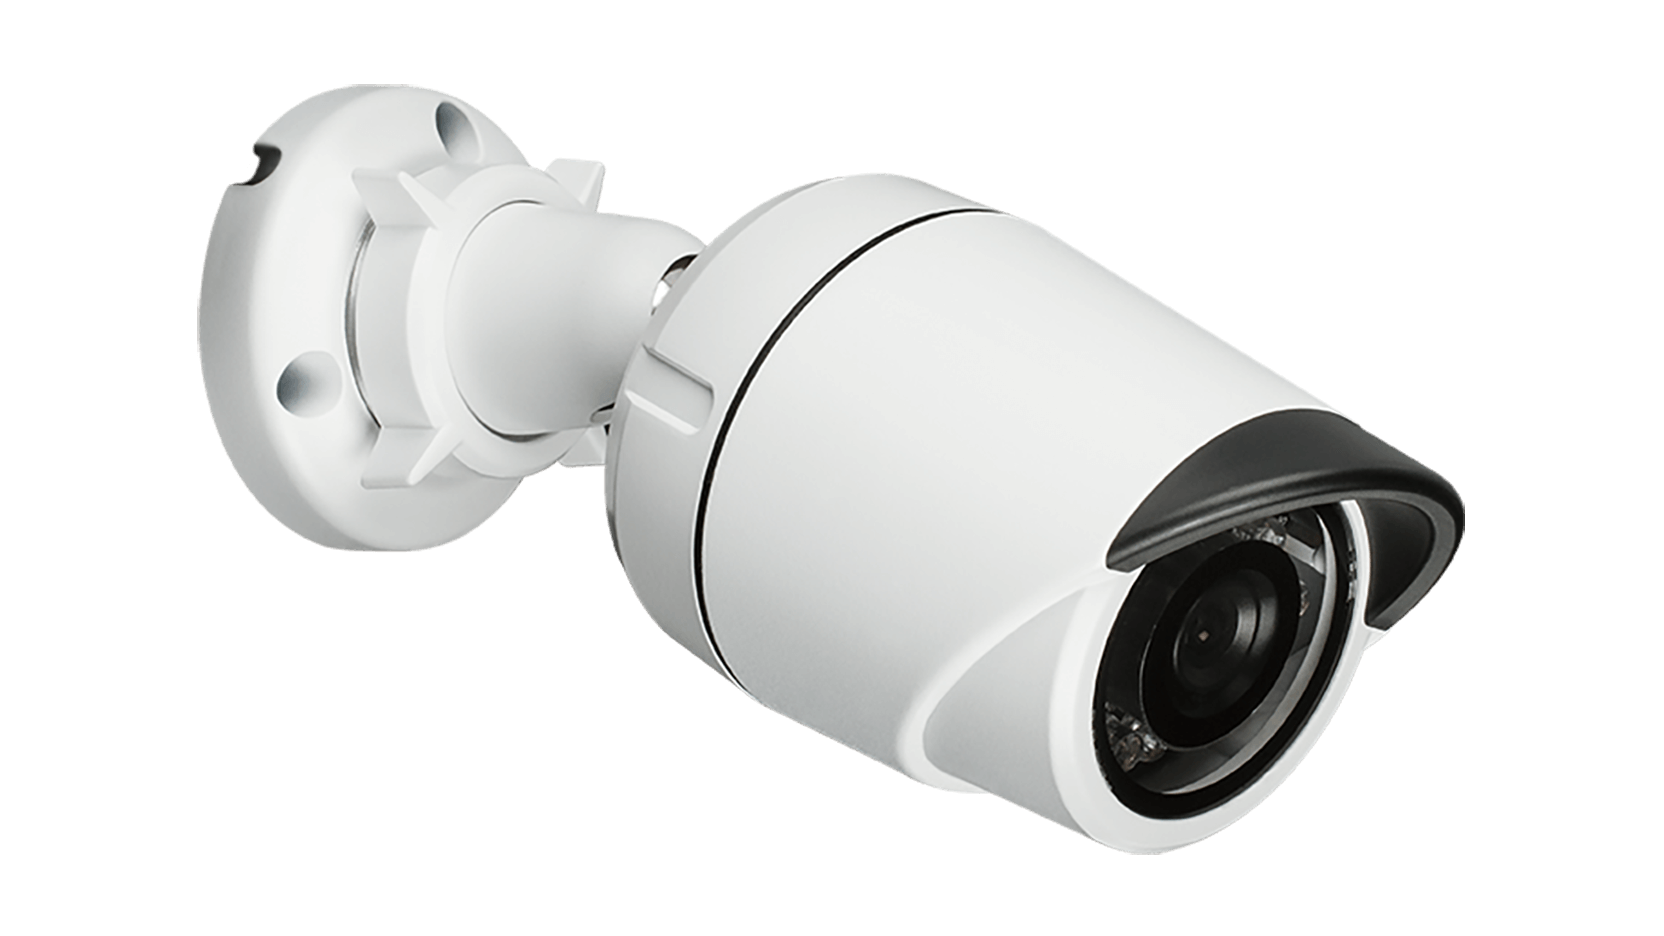 D-Link IP mrežna kamera za video nadzor DCS-4701E